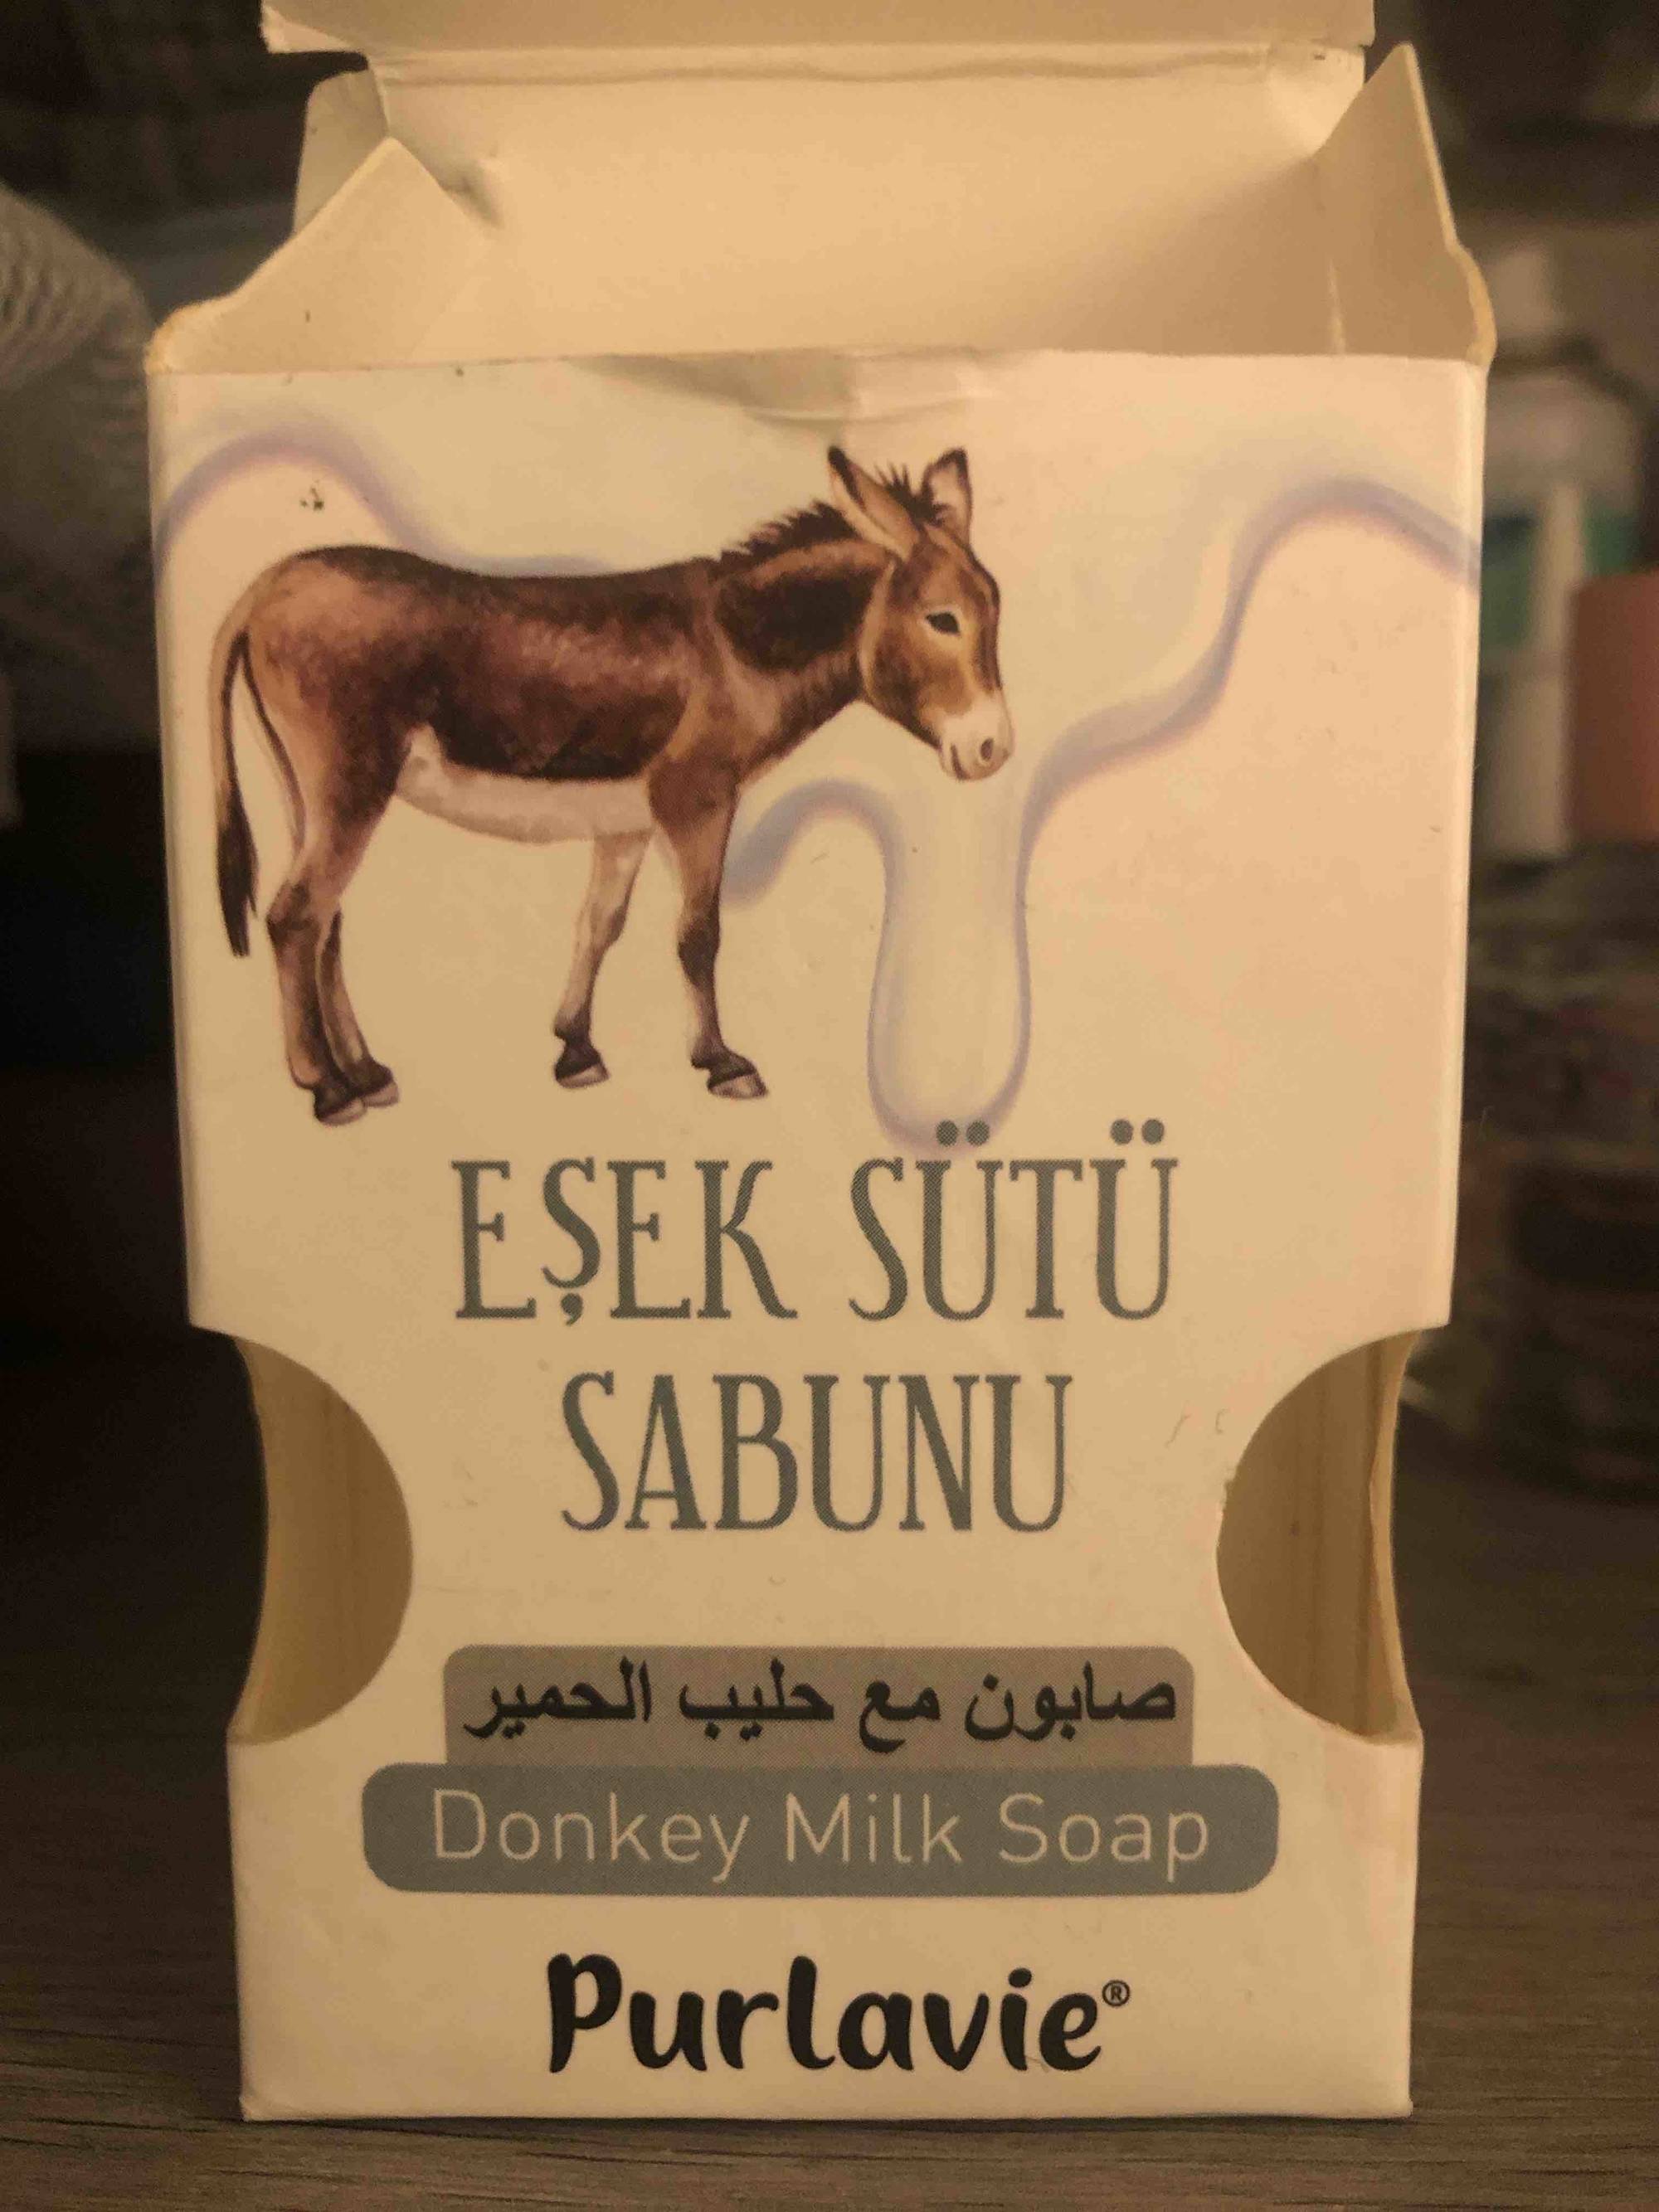 PURLAVIE - Donkey milk soap